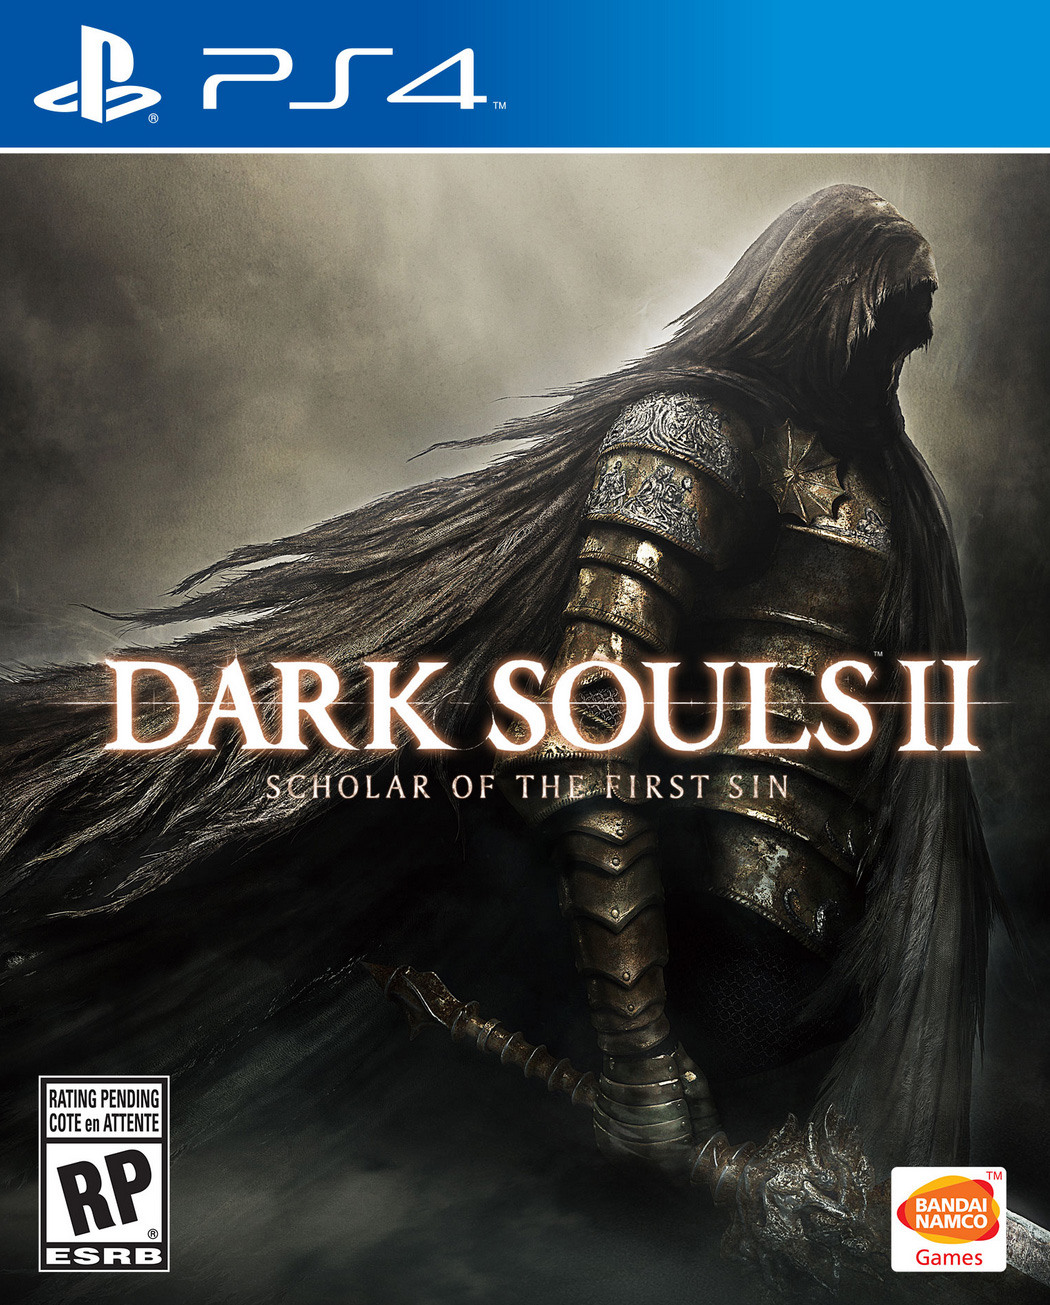 Dark Souls II PS4 box art